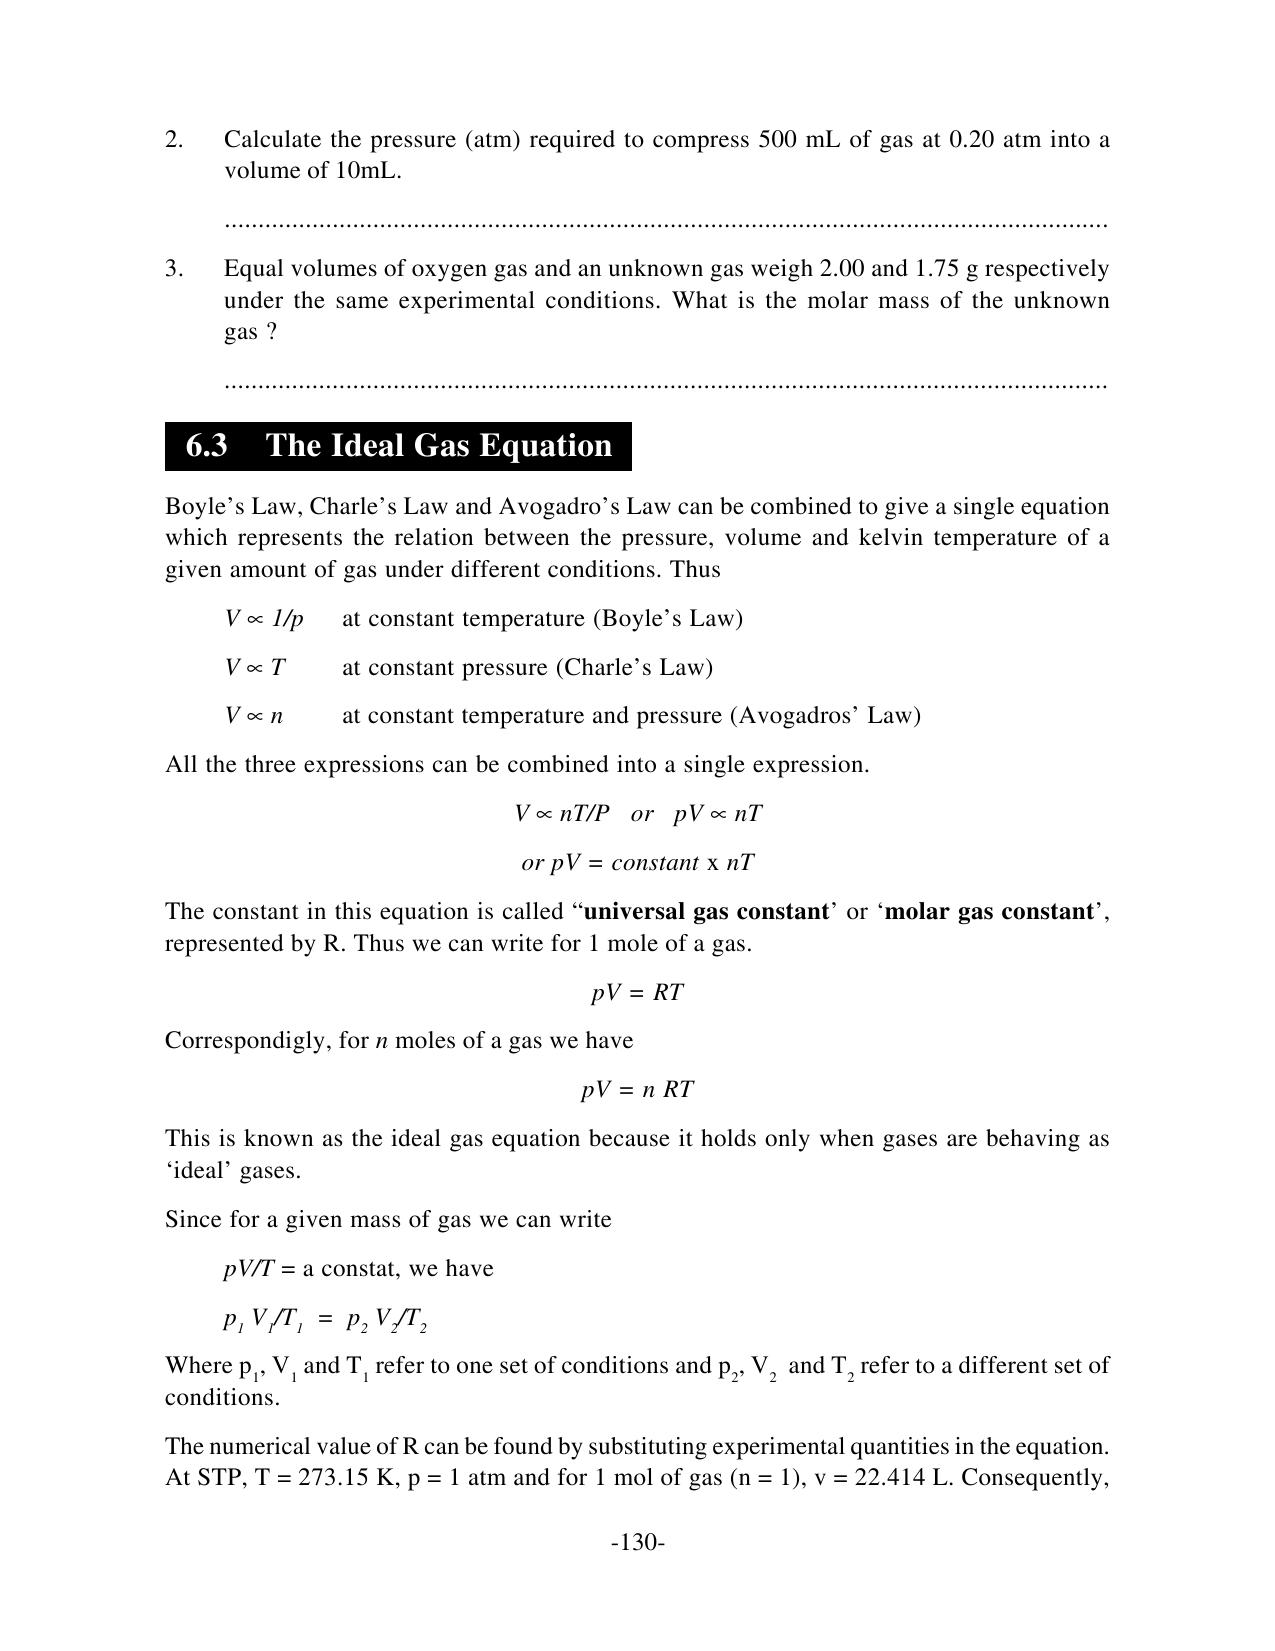 TS SCERT Inter 1st Year Chemistry Vol – I Path 1 (English Medium) Text Book - Page 139